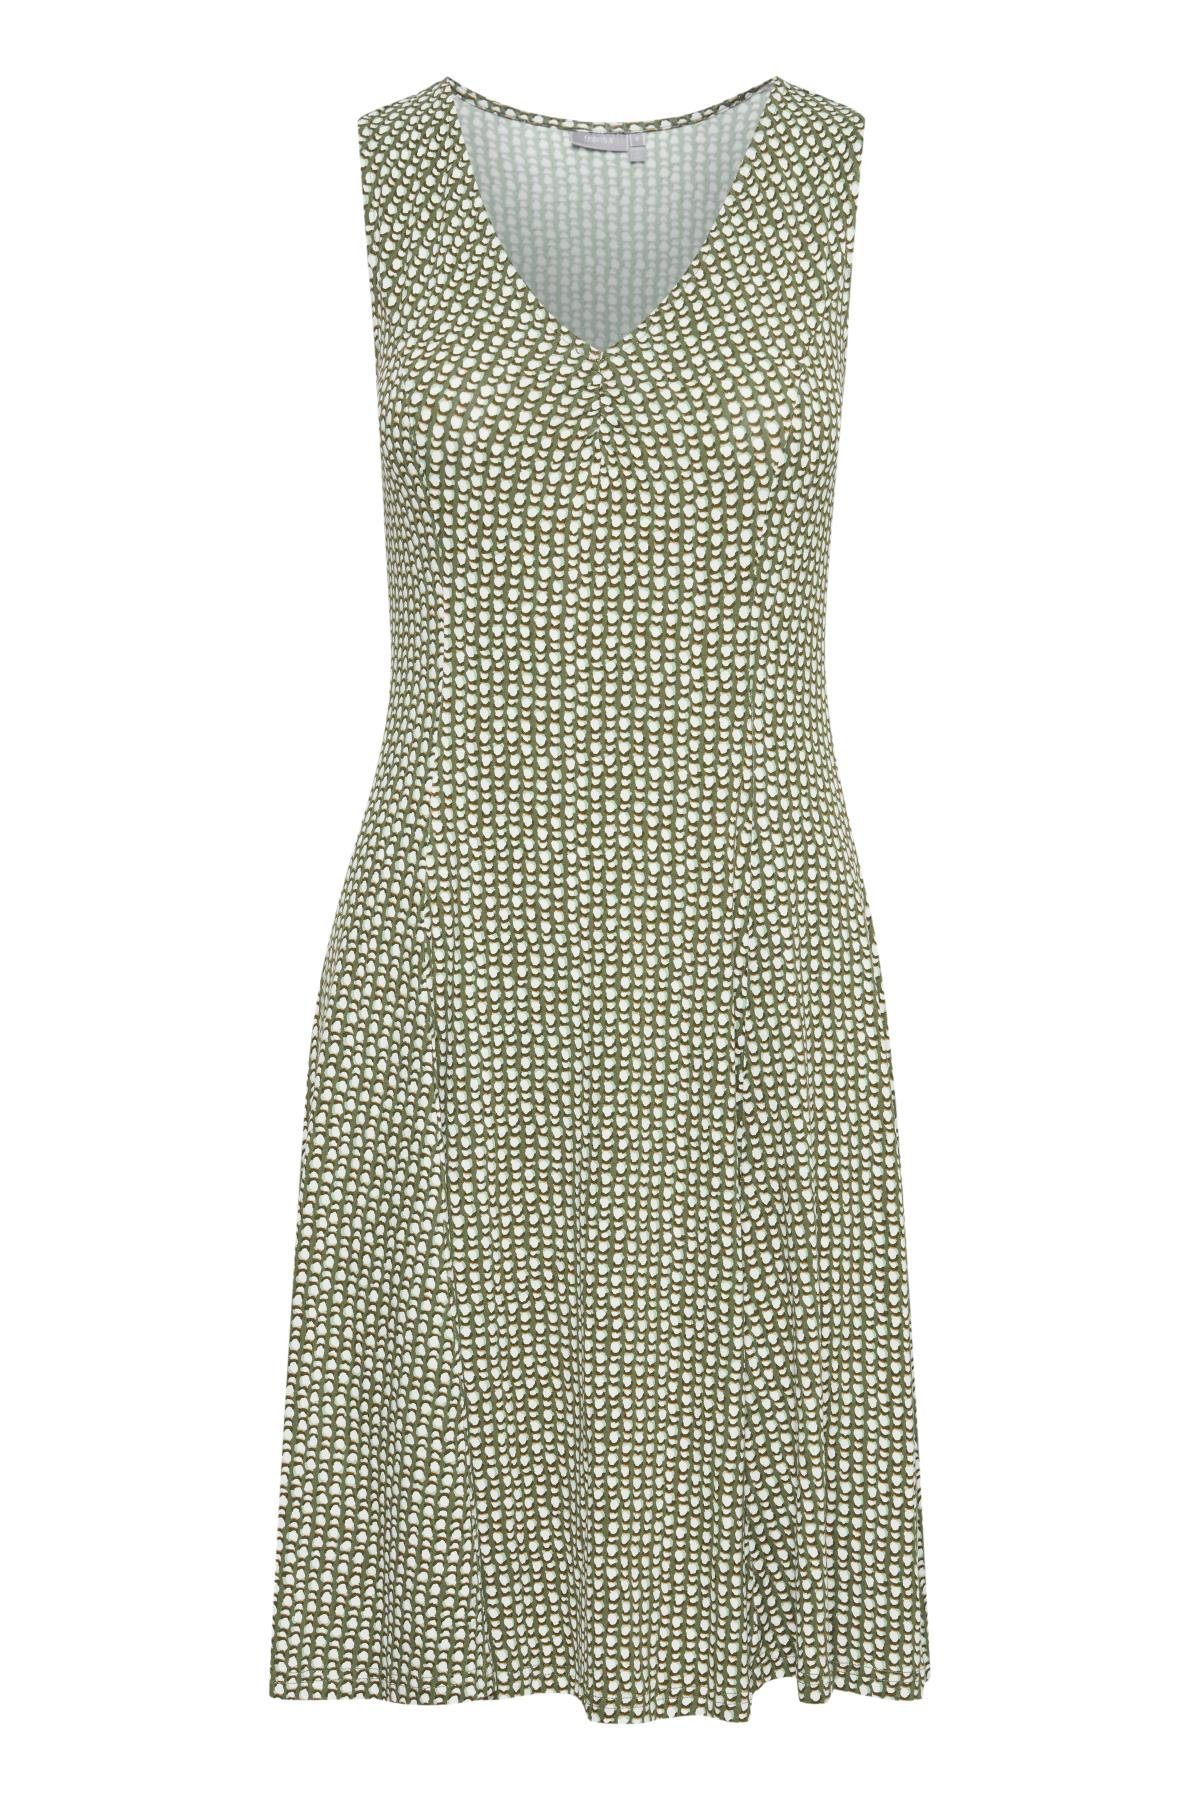 fransa Jerseykleid Fransa Olive graphic Dress Dusty 20609229 mix - FRAMDOT 3